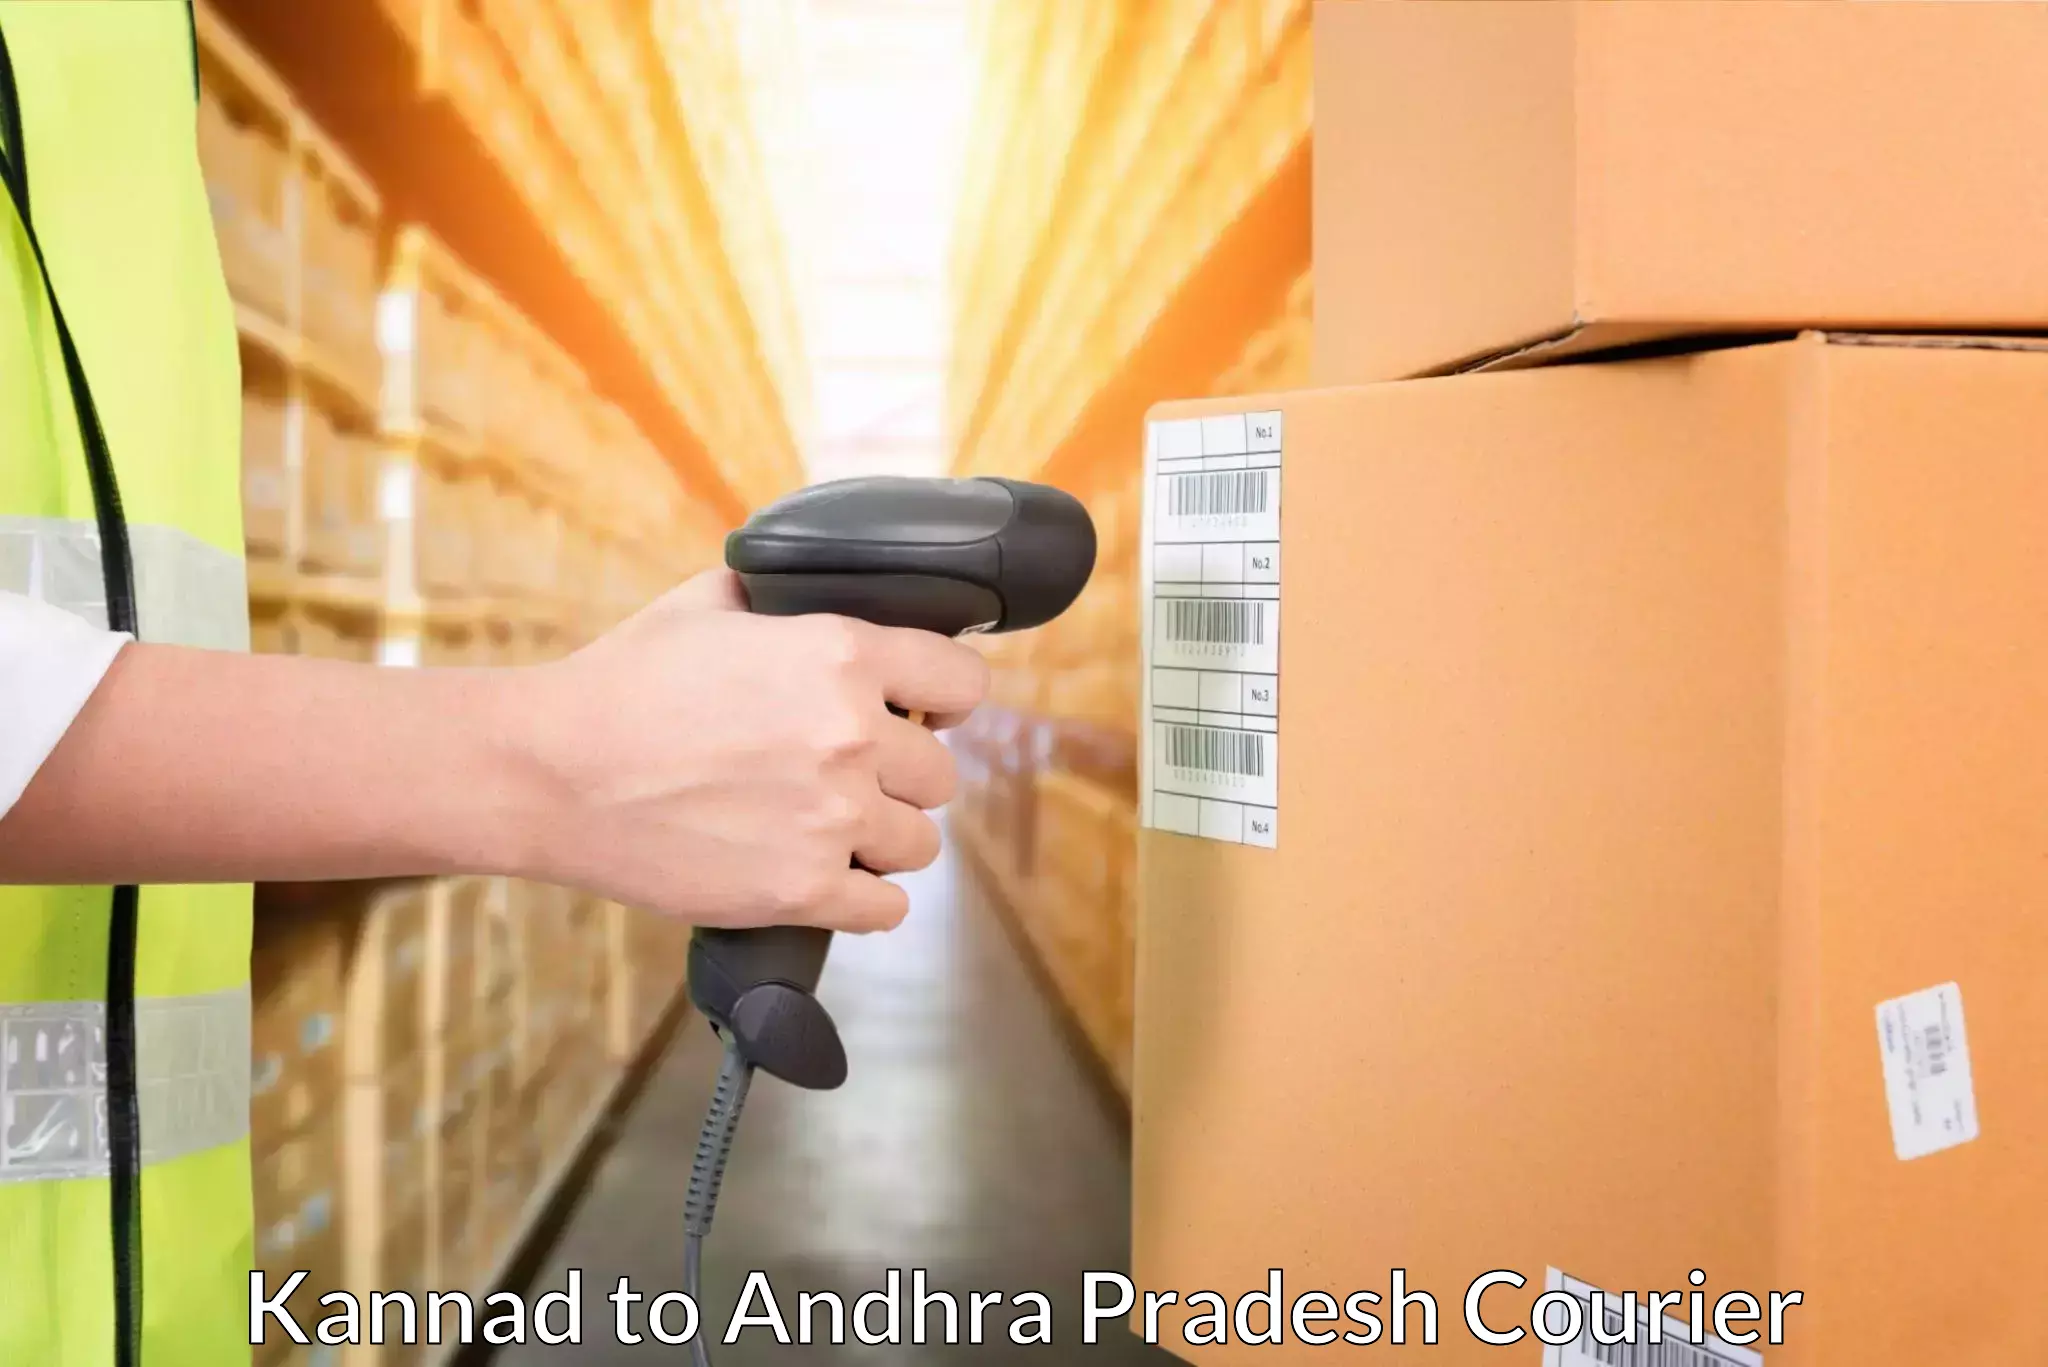 Efficient parcel tracking Kannad to Udayagiri